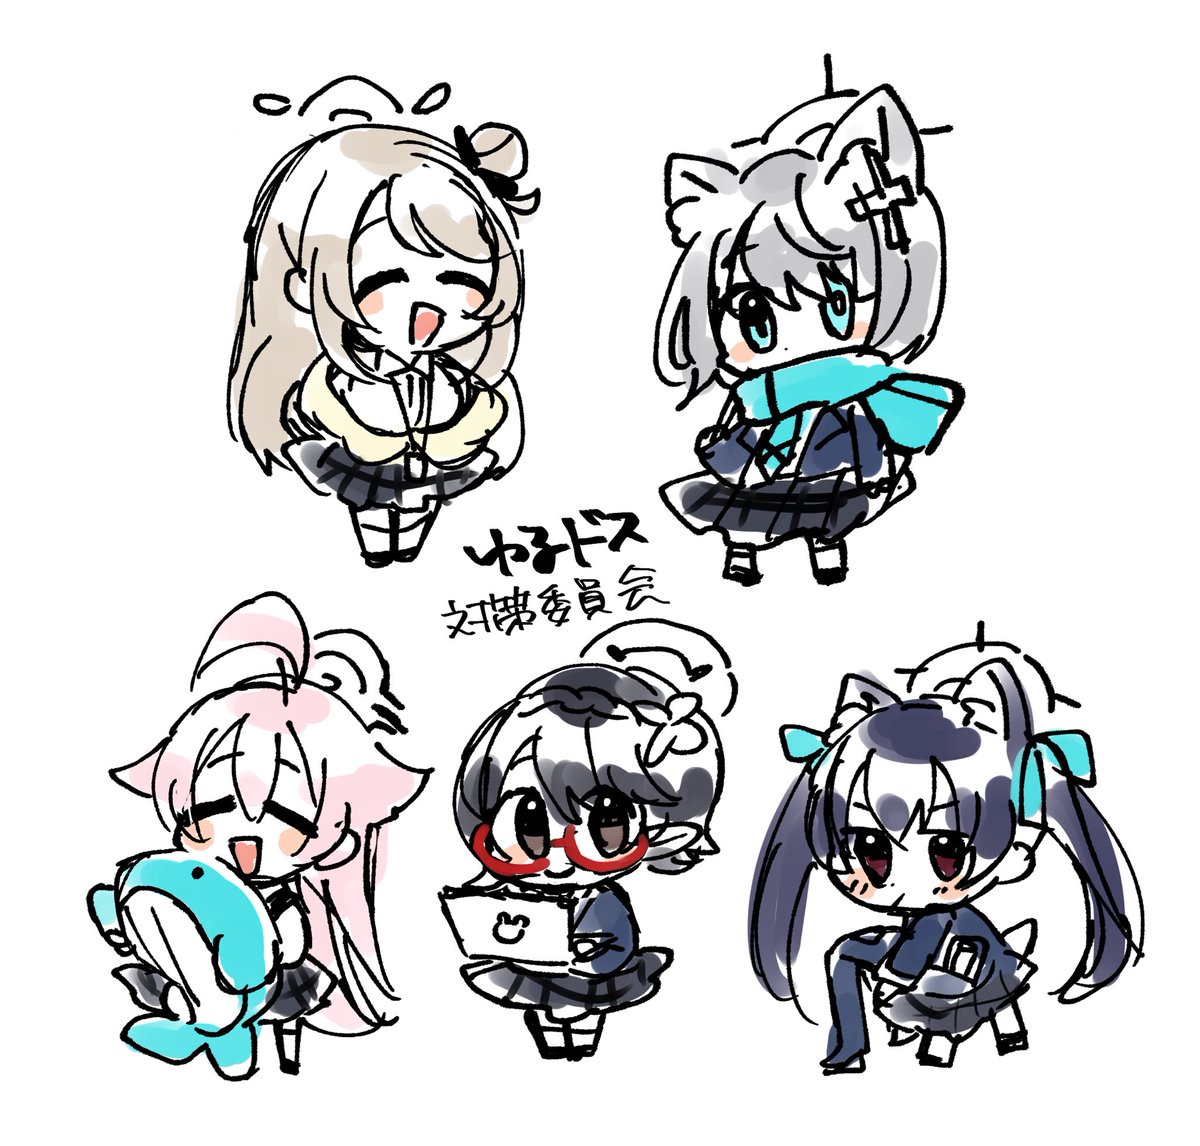 hoshino (blue archive) ,shiroko (blue archive) multiple girls 2girls halo scarf animal ears skirt pink hair  illustration images